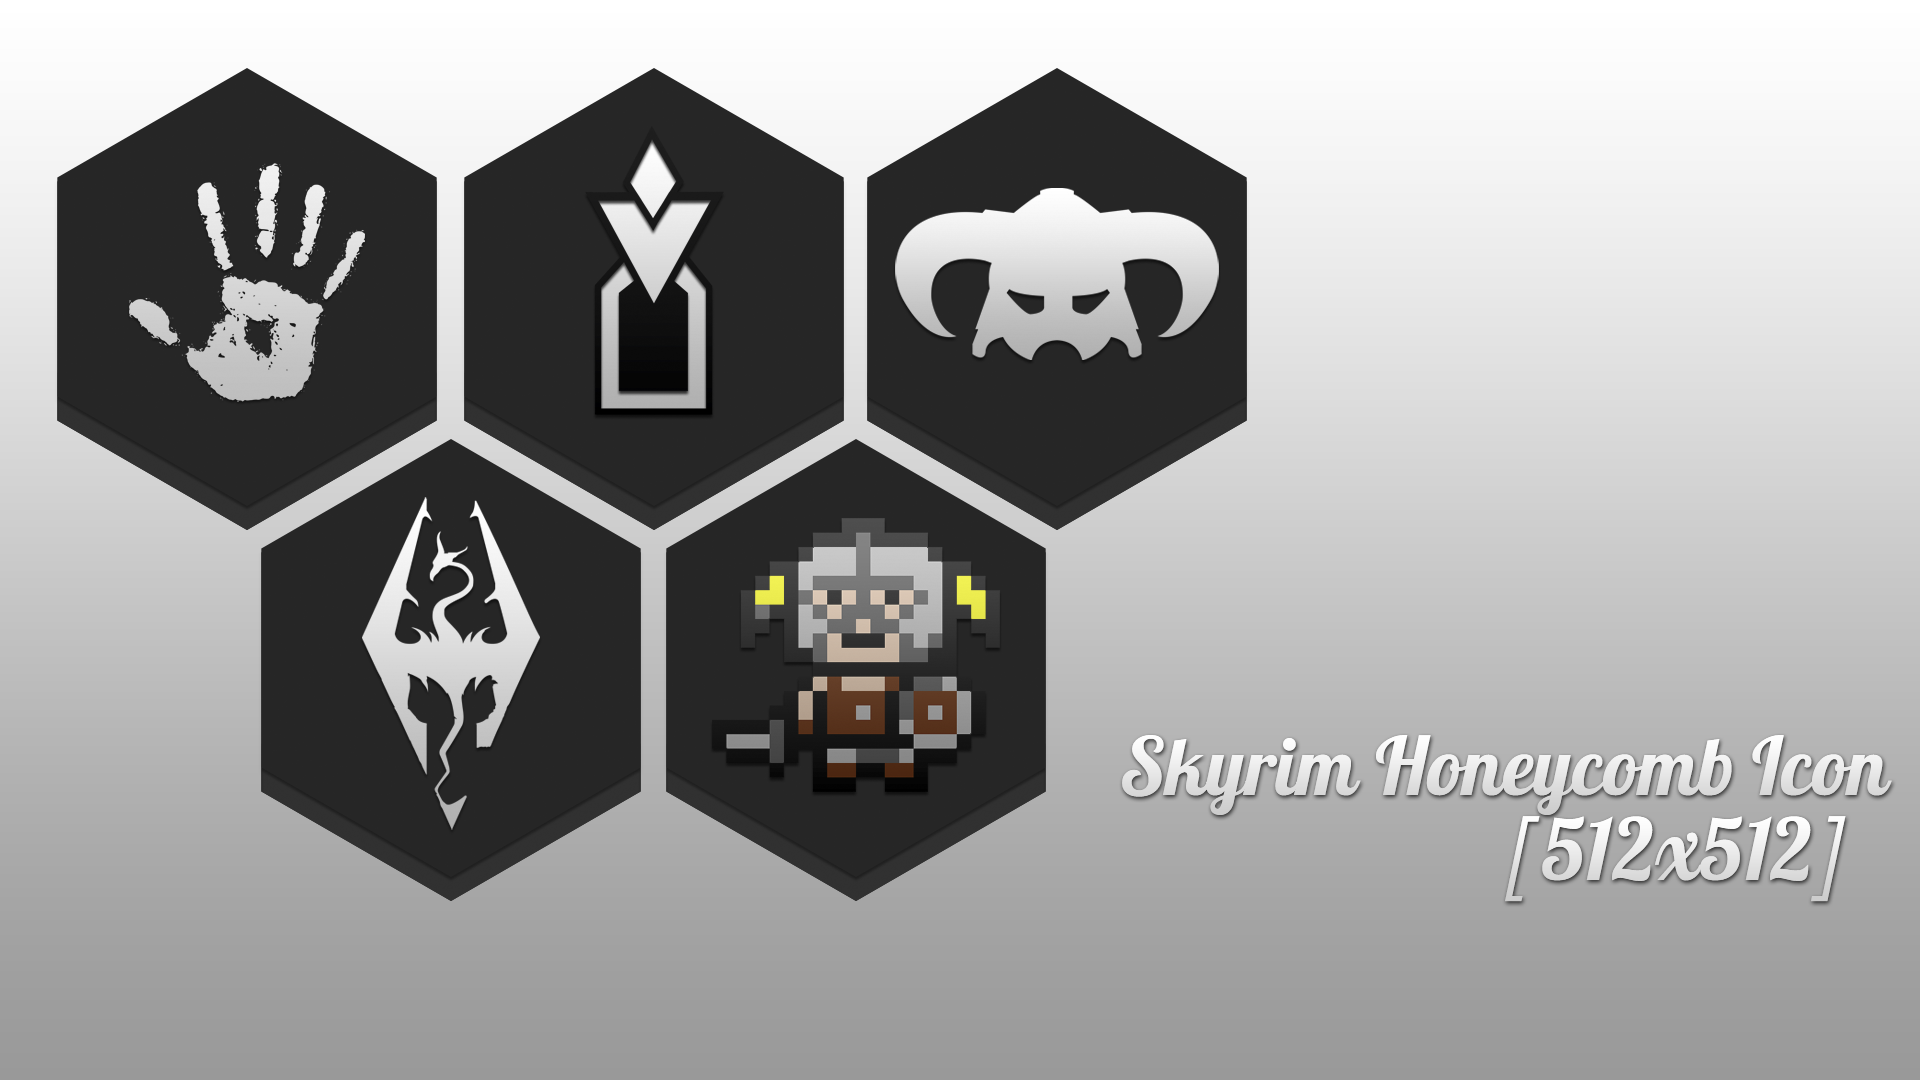 Skyrim Honeycomb Icon. 